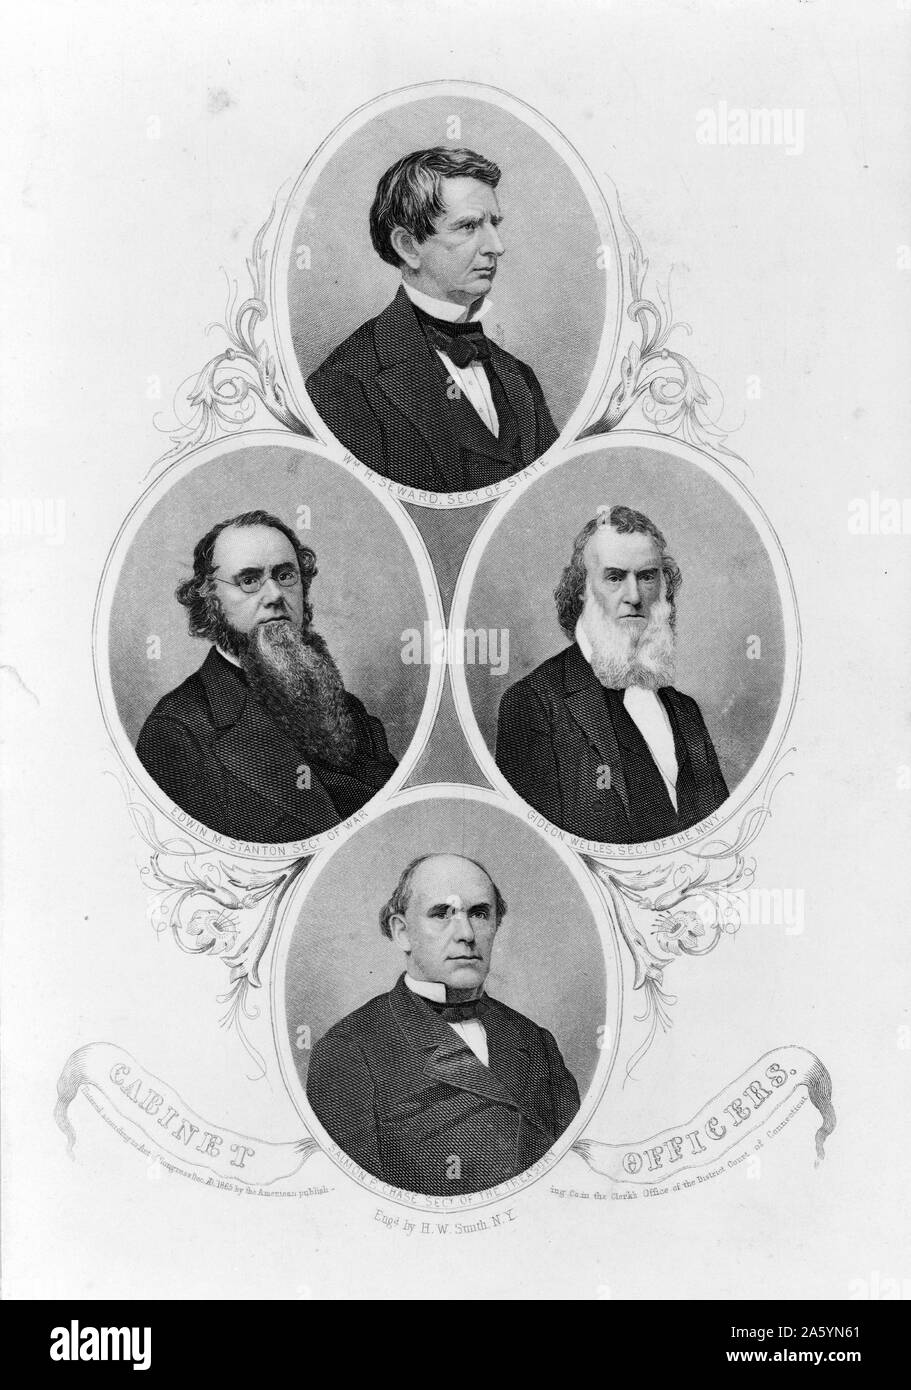 Portrait of President Abraham Lincoln's Cabinet 1828. Secretary of State; William H. Seward, Secretary of War; Gideon Welles, Secretary of the Navy; Edwin M. Stanton, Secretary of the Treasury; Salmon P Chase. Henry Wright Smith. Stock Photo